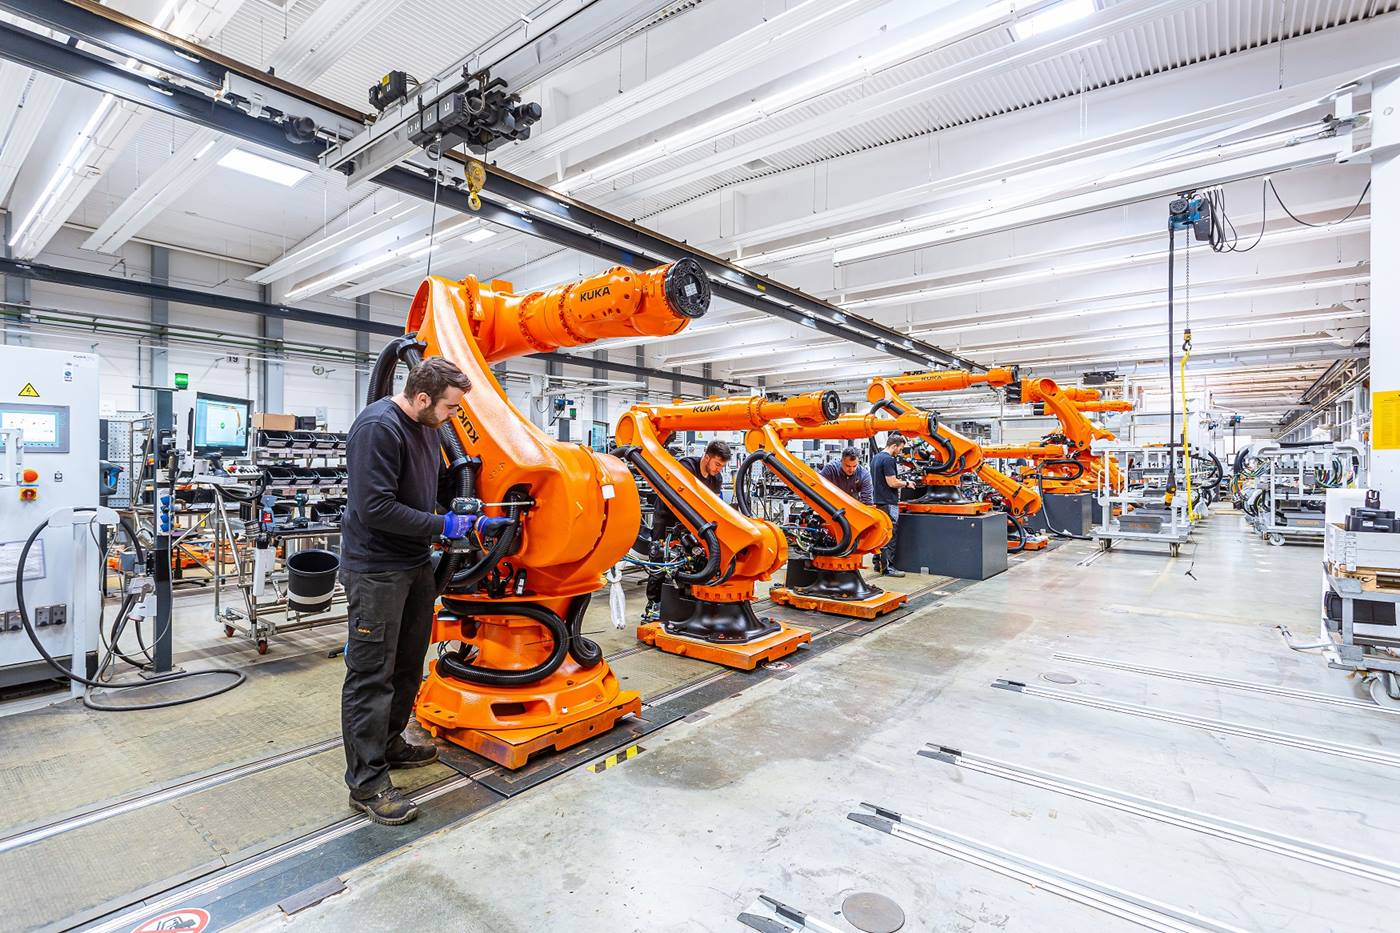 A look inside the robot production shops at KUKA in Augsburg: an employee assembles a KUKA robot. 